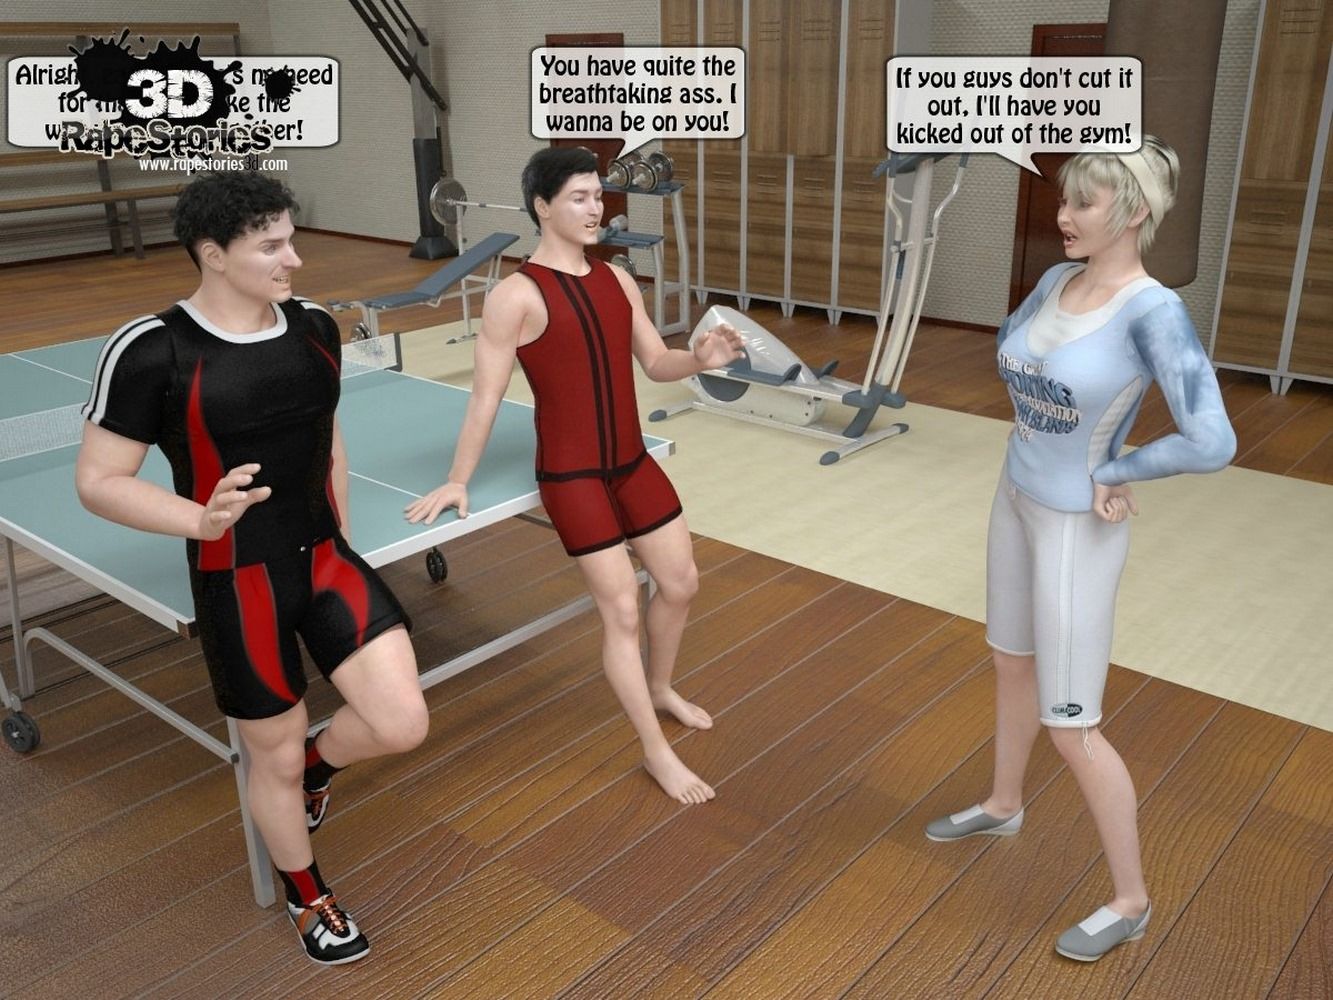 3DRapestory-2 Guys Rape chick in gym page 7